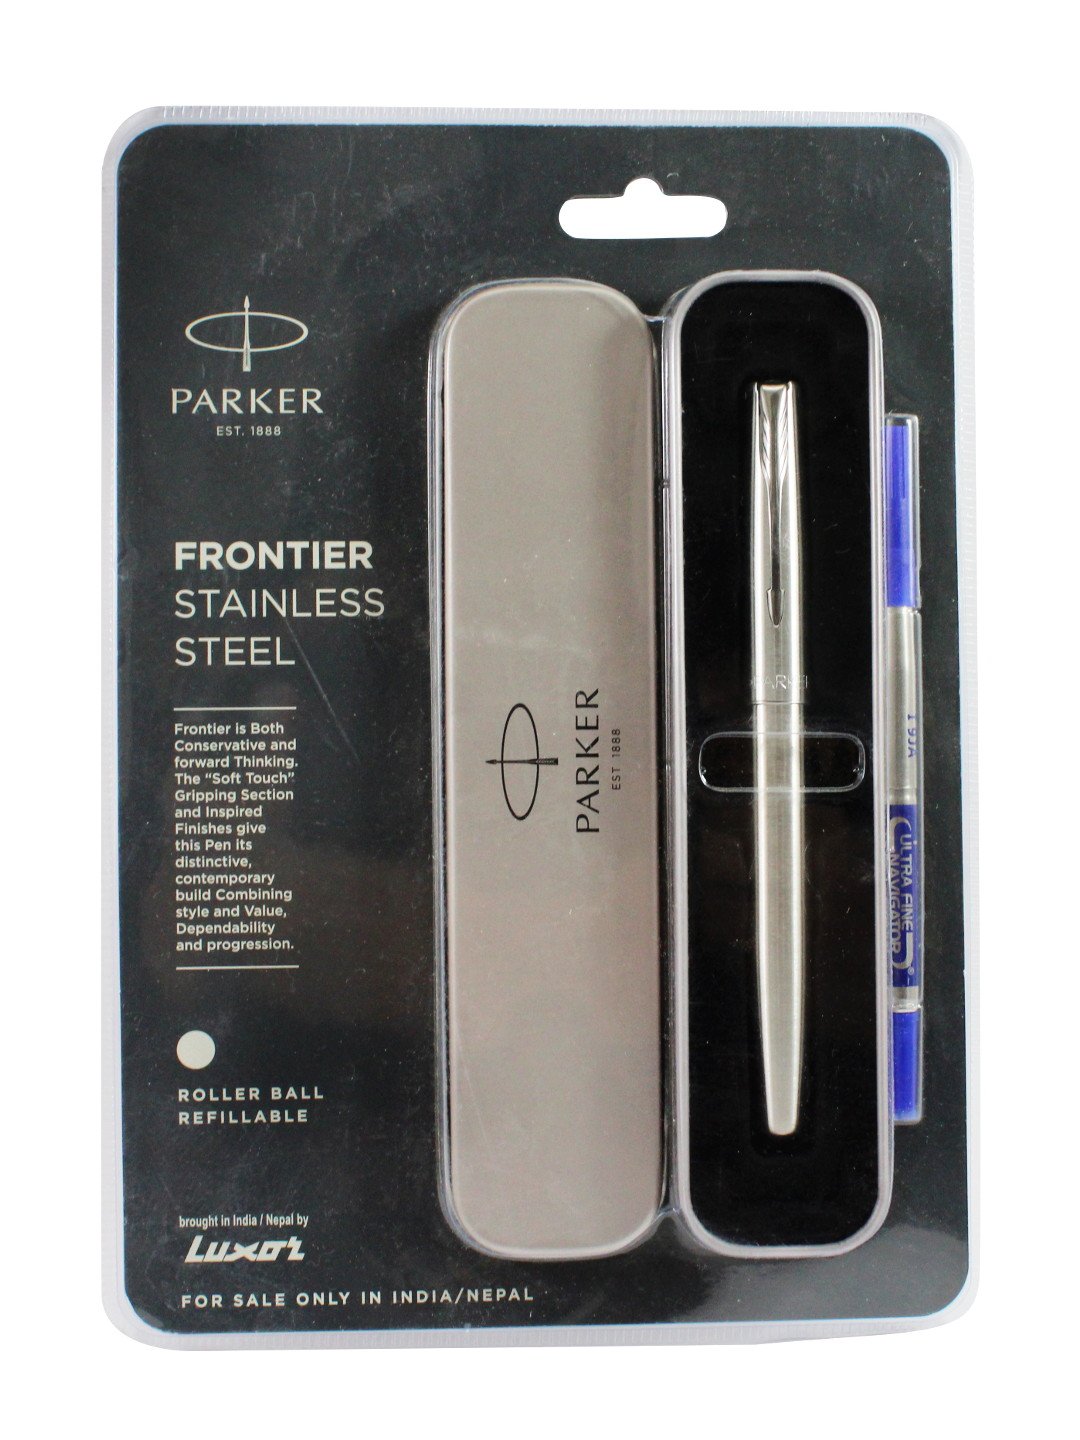 Detec™ Parker Frontier Stainless Steel Roller Ball Pen Refillable